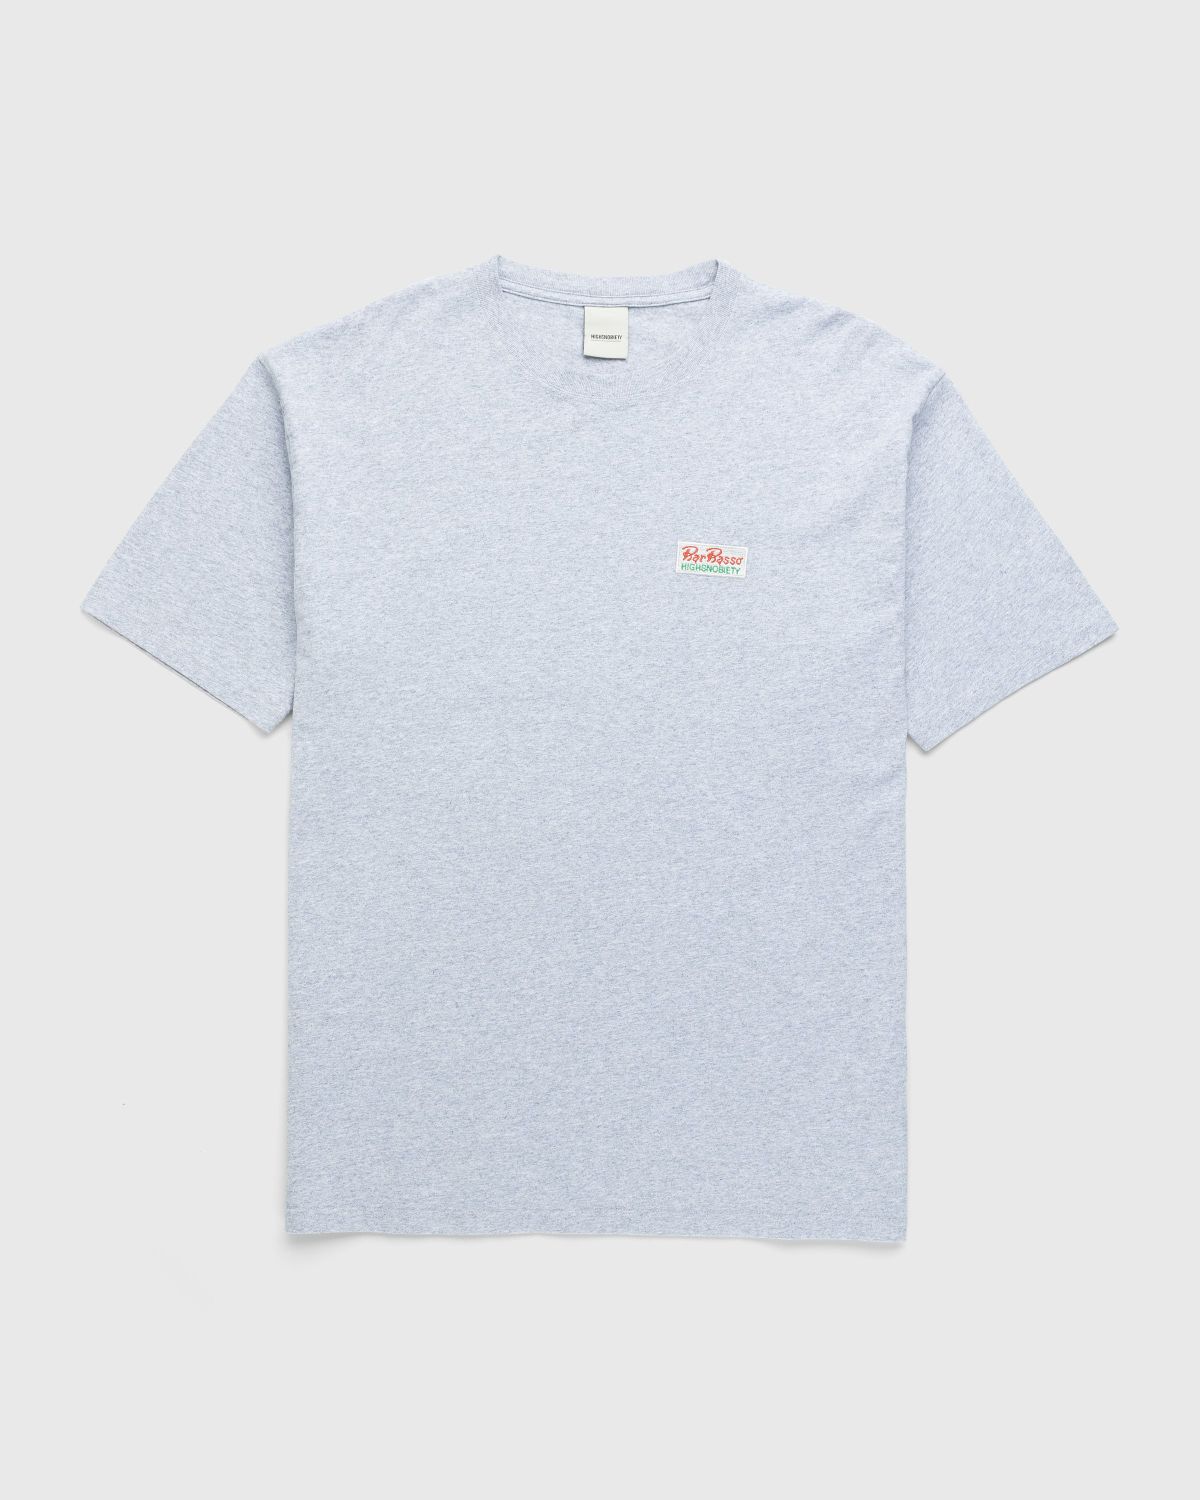 Bar Basso x Highsnobiety – Graphic T-Shirt Grey - Tops - Grey - Image 2